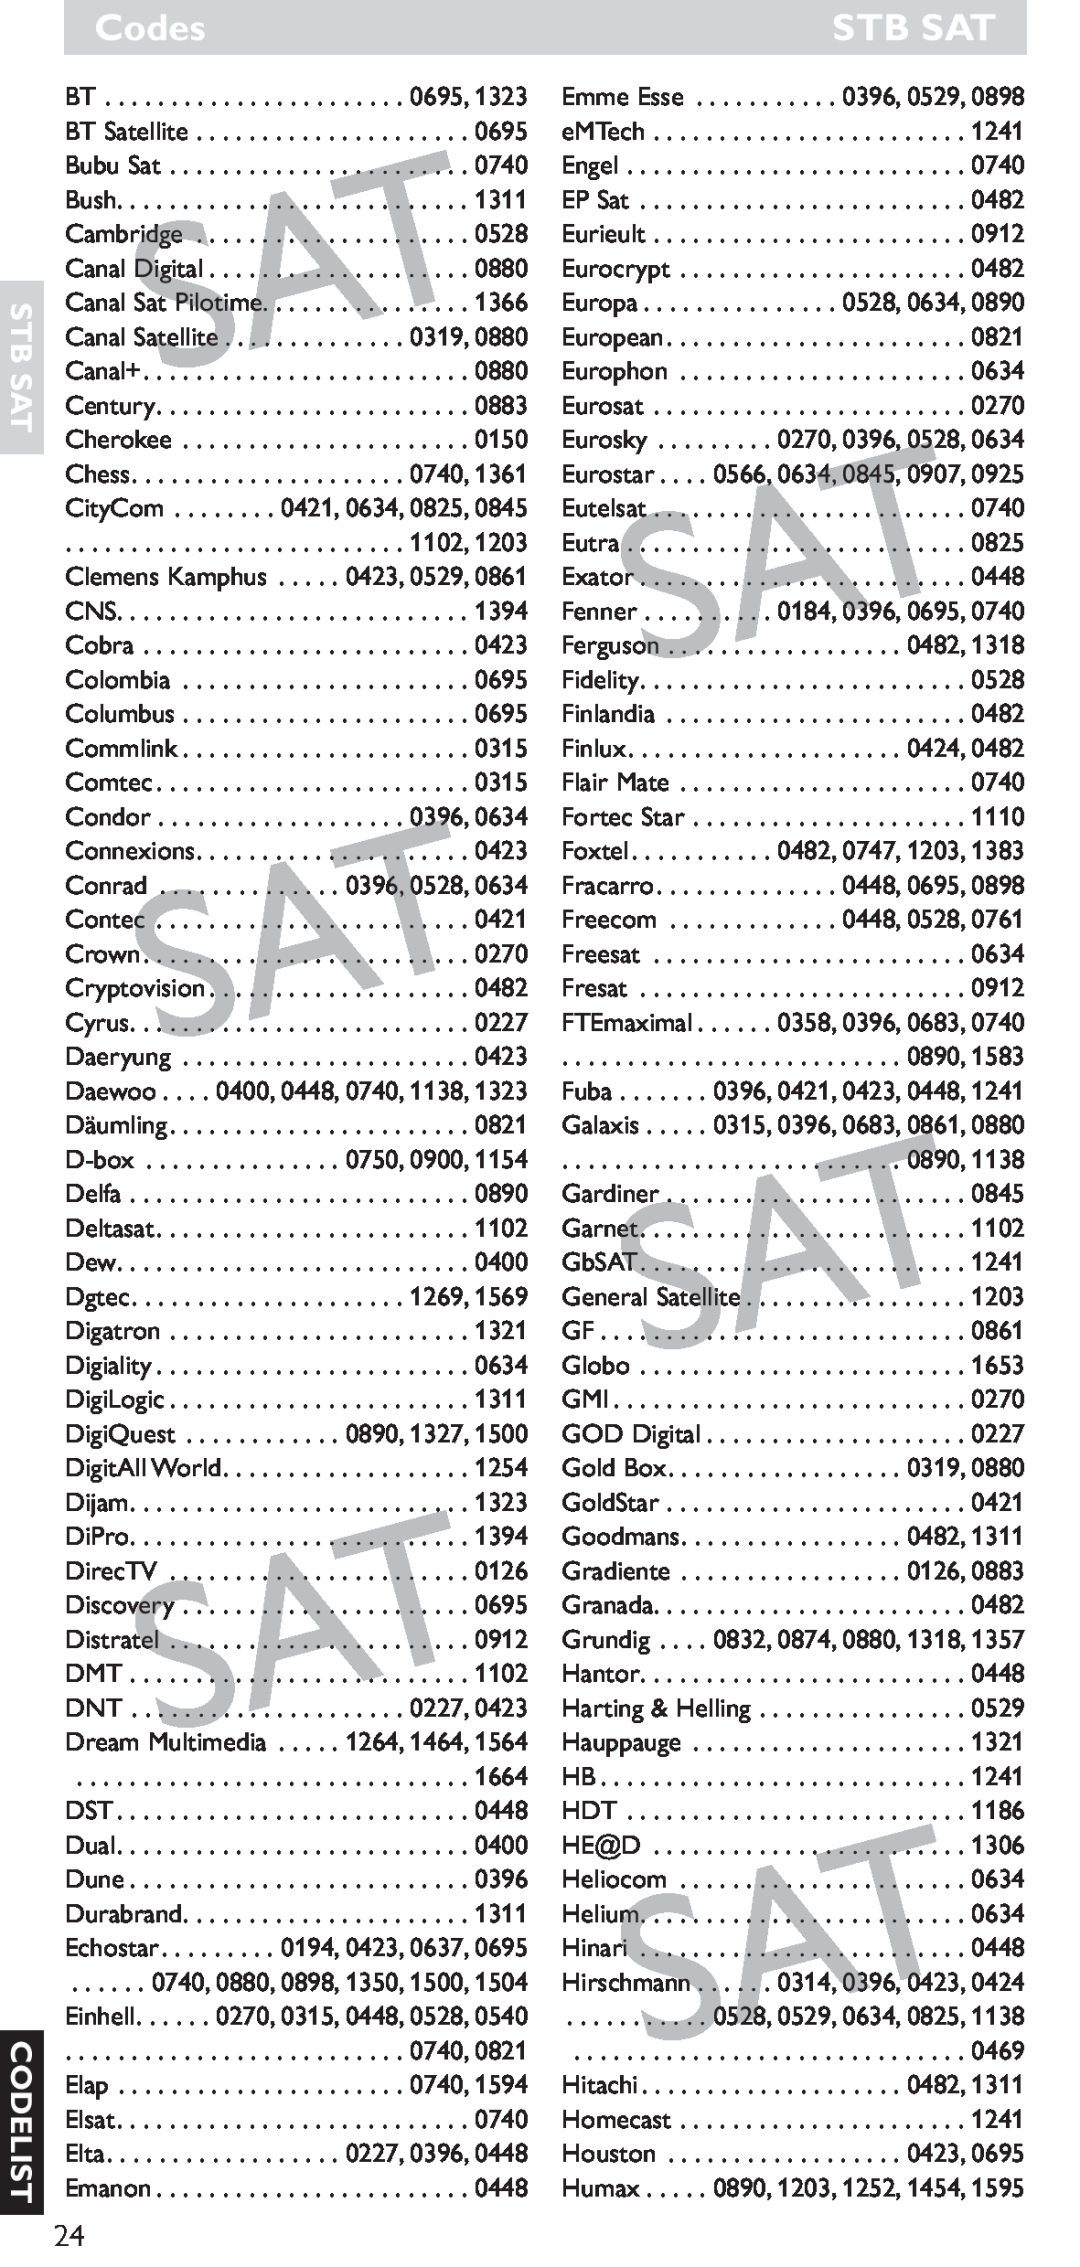 Hitachi SRU 5040/05 manual Stb Sat Codelist, Codes 